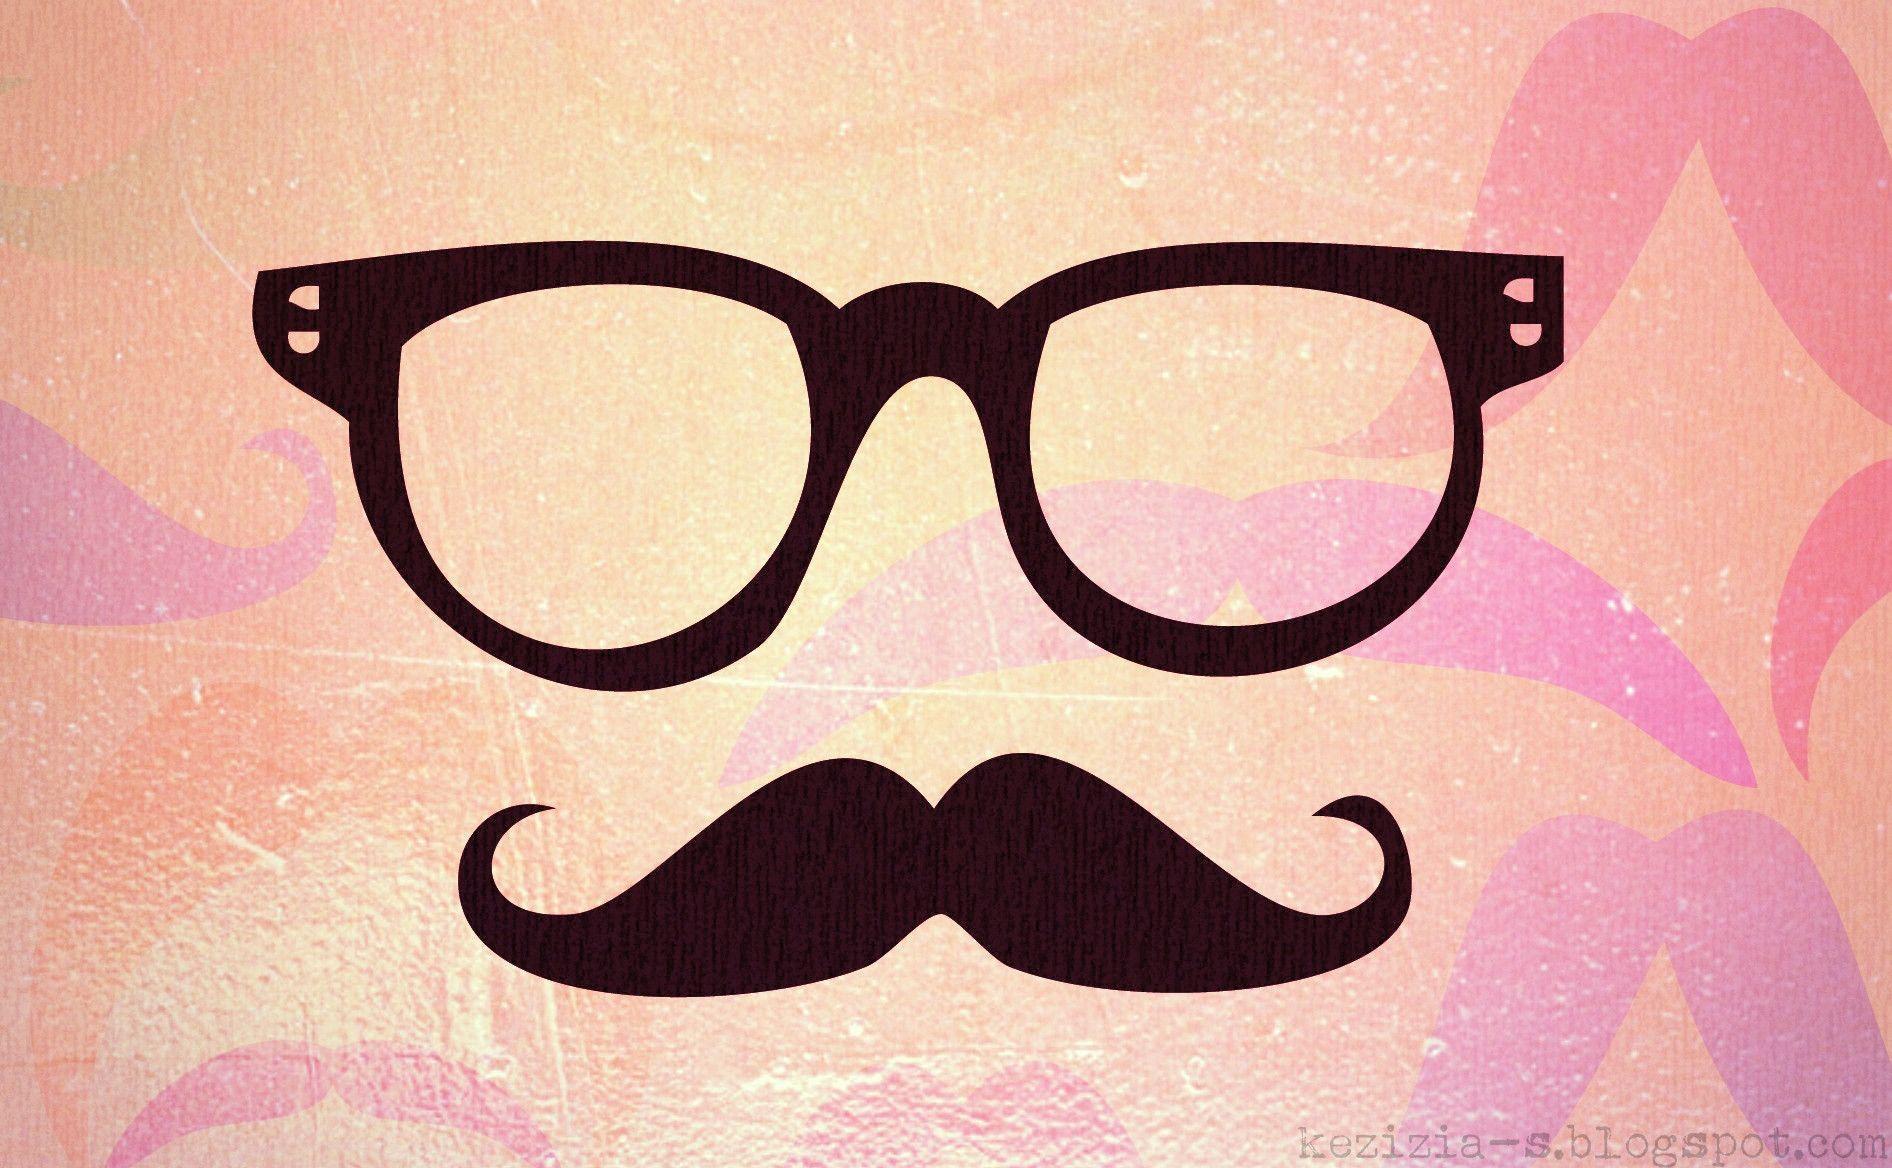 Cute Mustache Wallpaper Tumblr Love and Funny Wallpaper